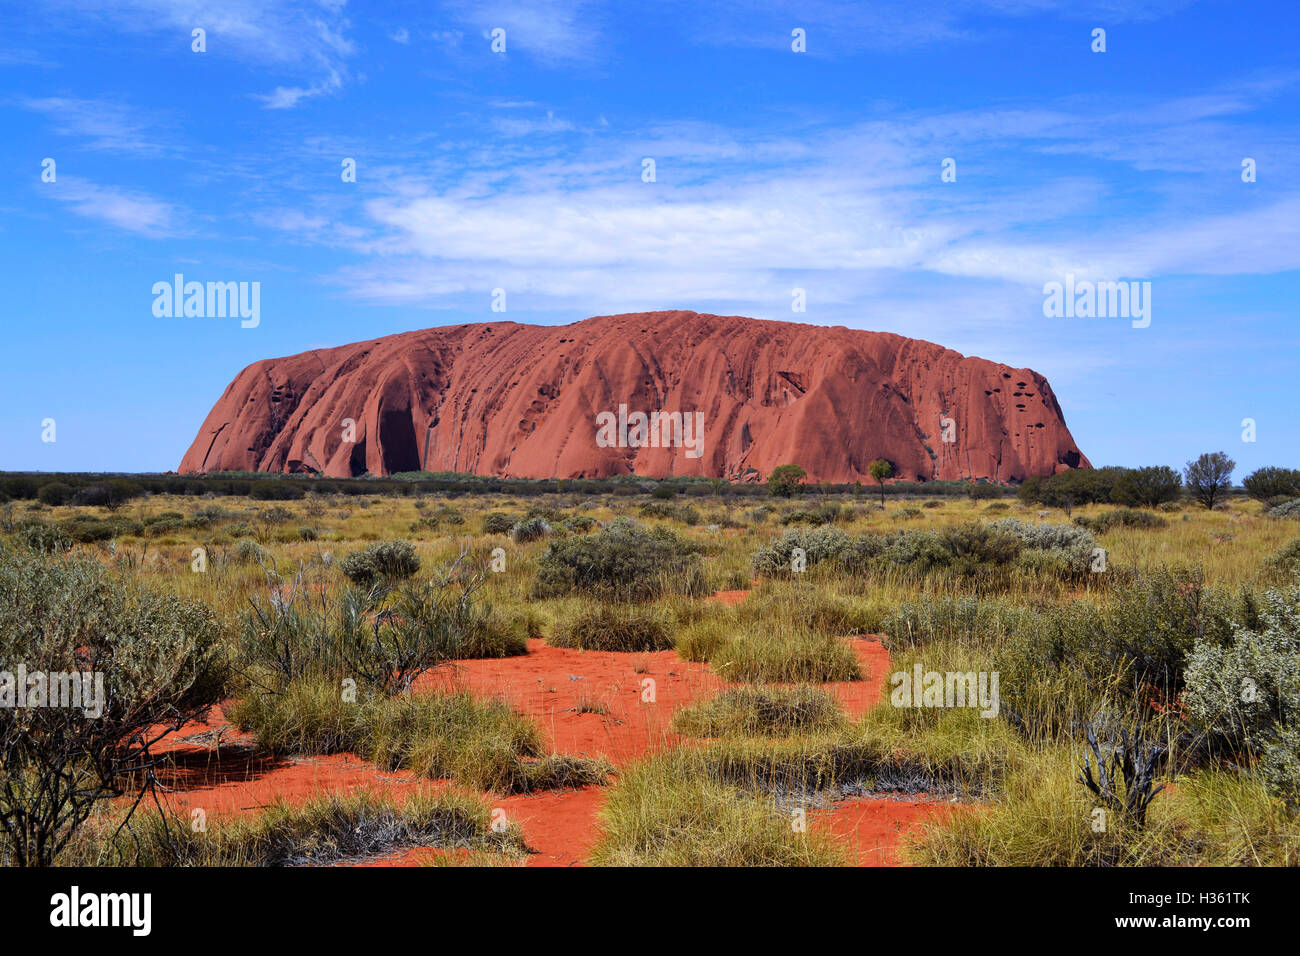 Ayers Rock (Uluru) - Australia Stock Photo